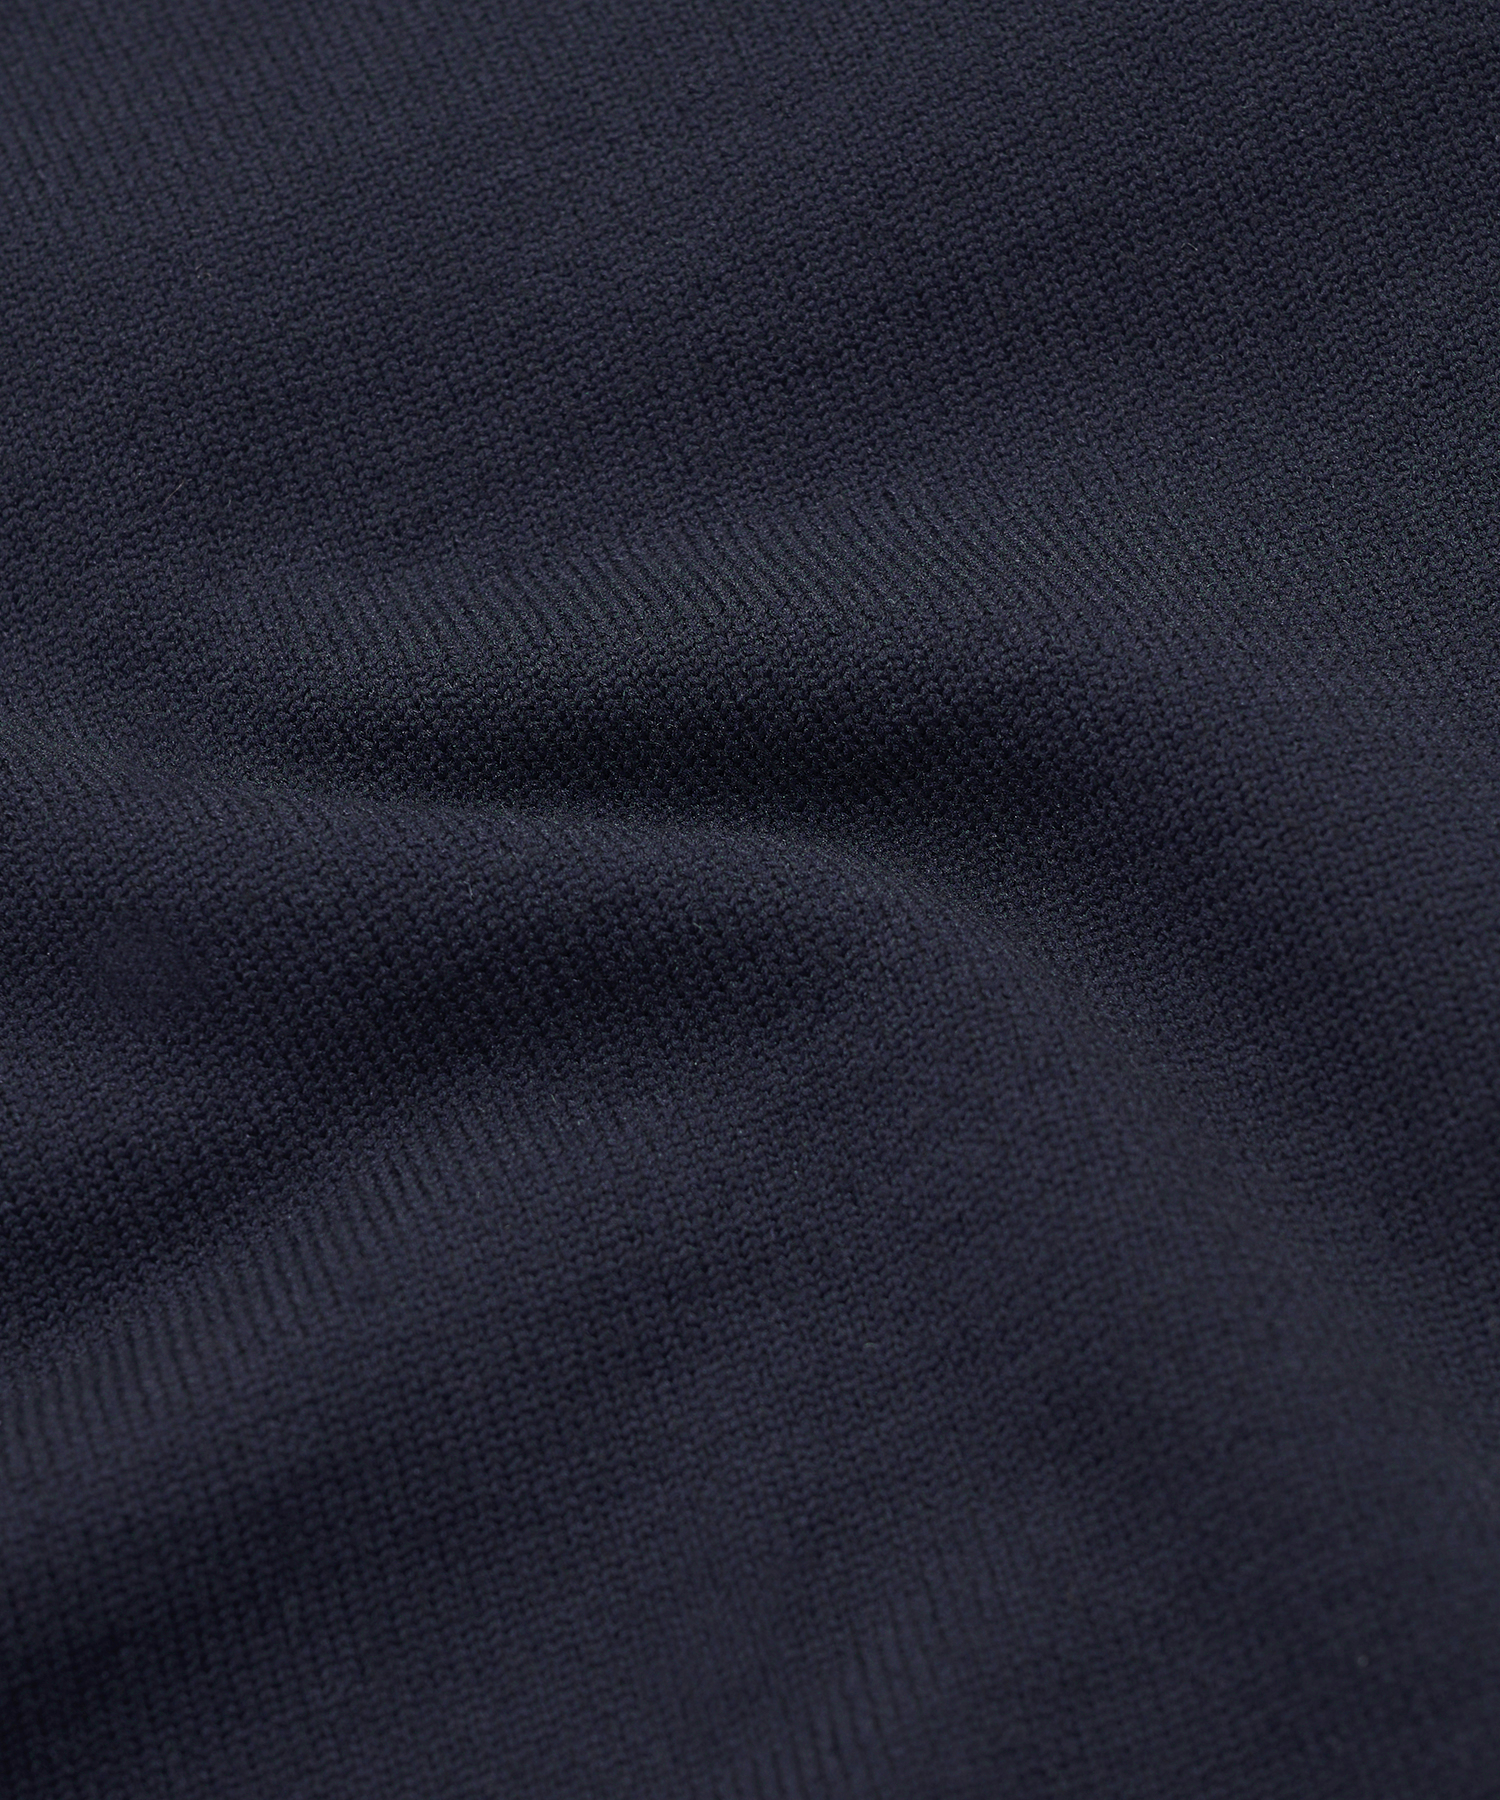 SOCI3TY Vest techfabric donkerblauw - The Society Shop